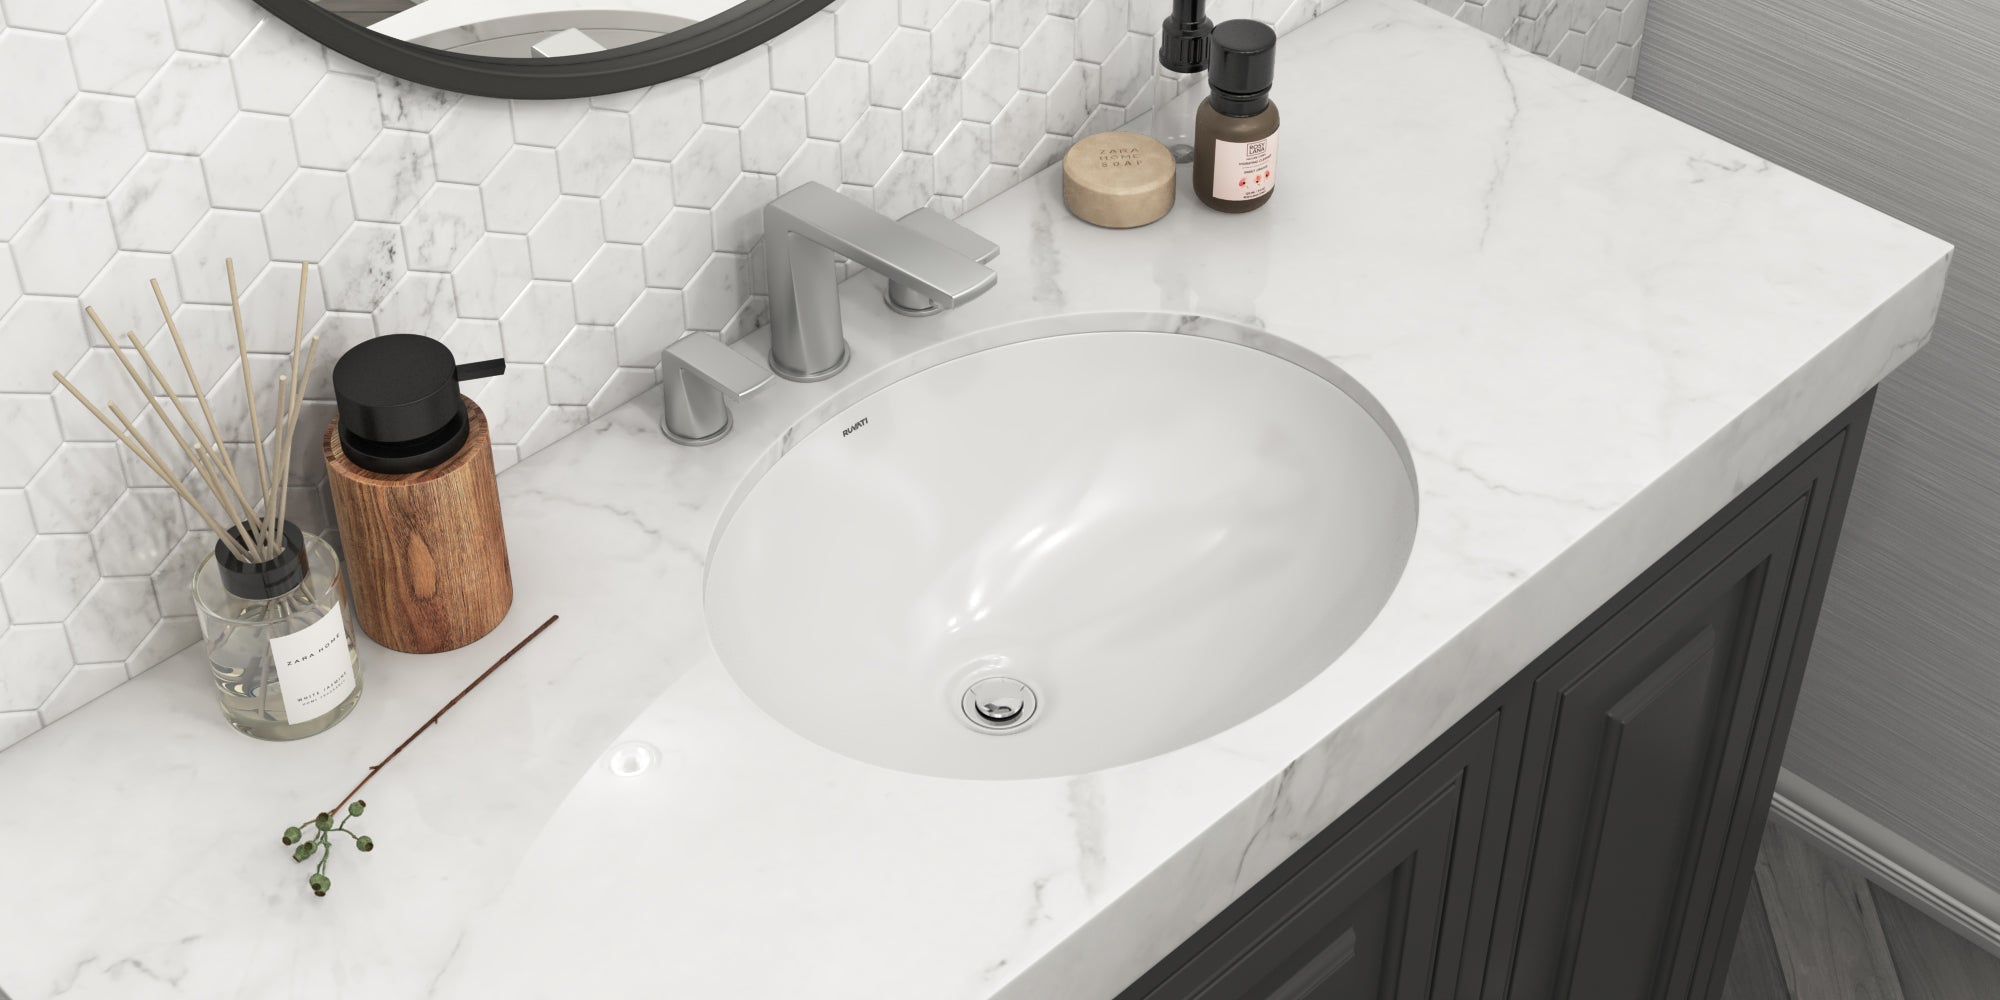 Ruvati 15" x 12" Oval Undermount Bathroom Sink in White